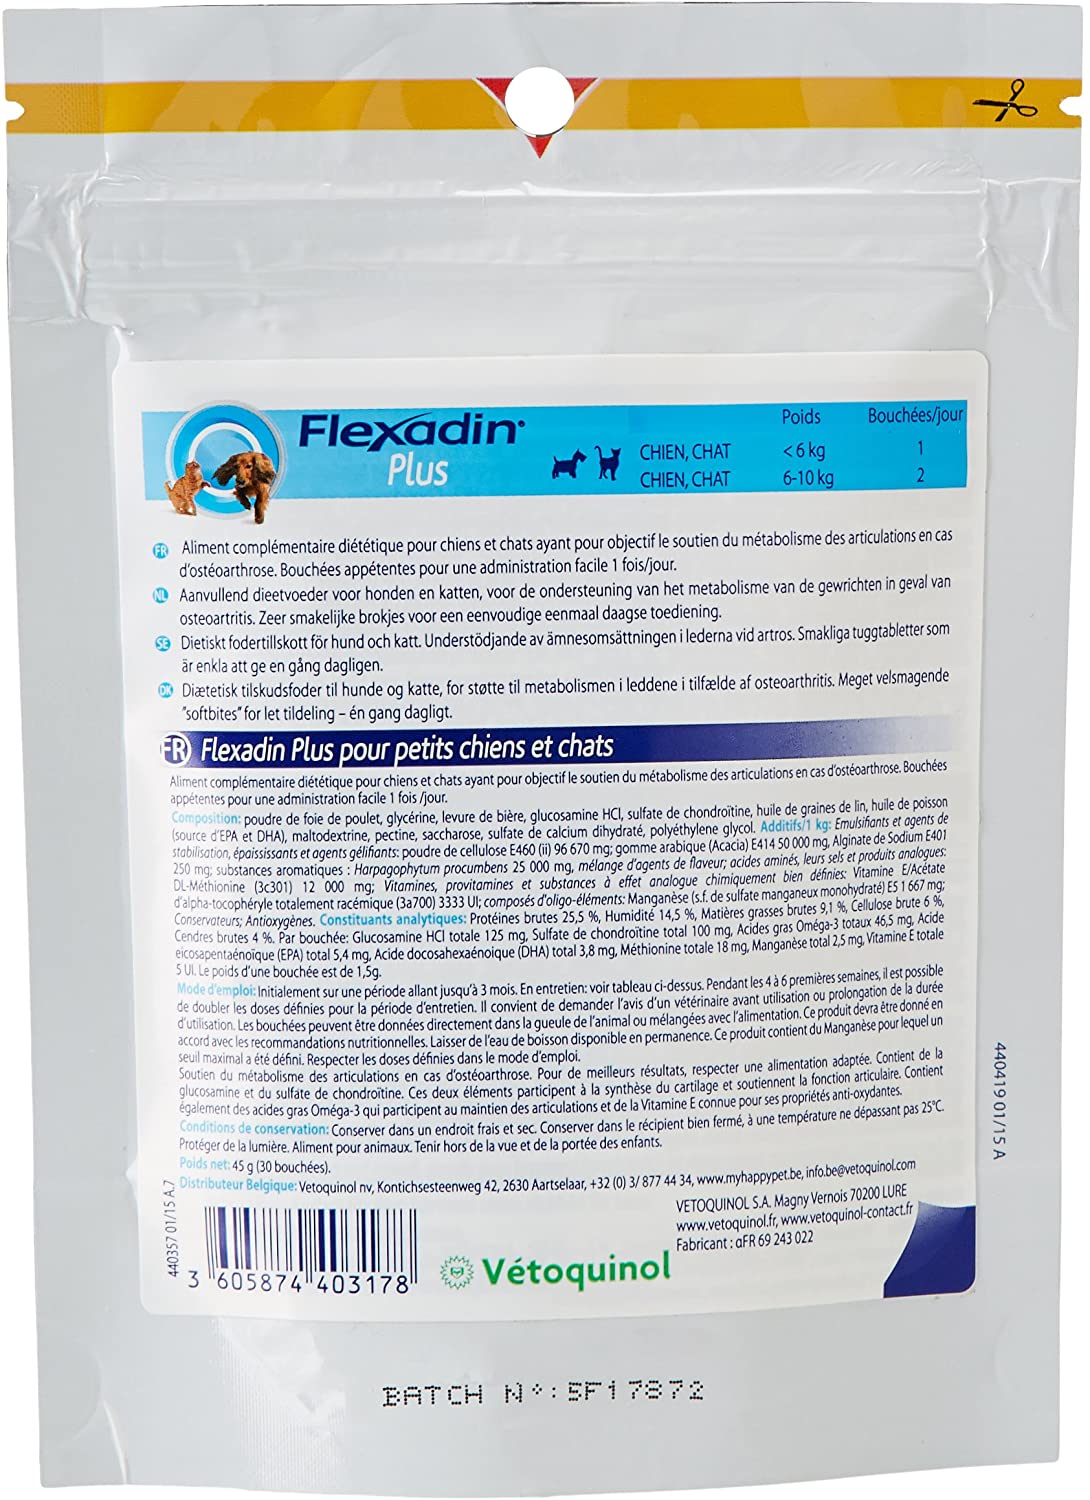  Vetoquinol Flexadin Plus - Complemento alimenticio para Gato/Gato (Menos de 10 kg, 30 Bouches) 